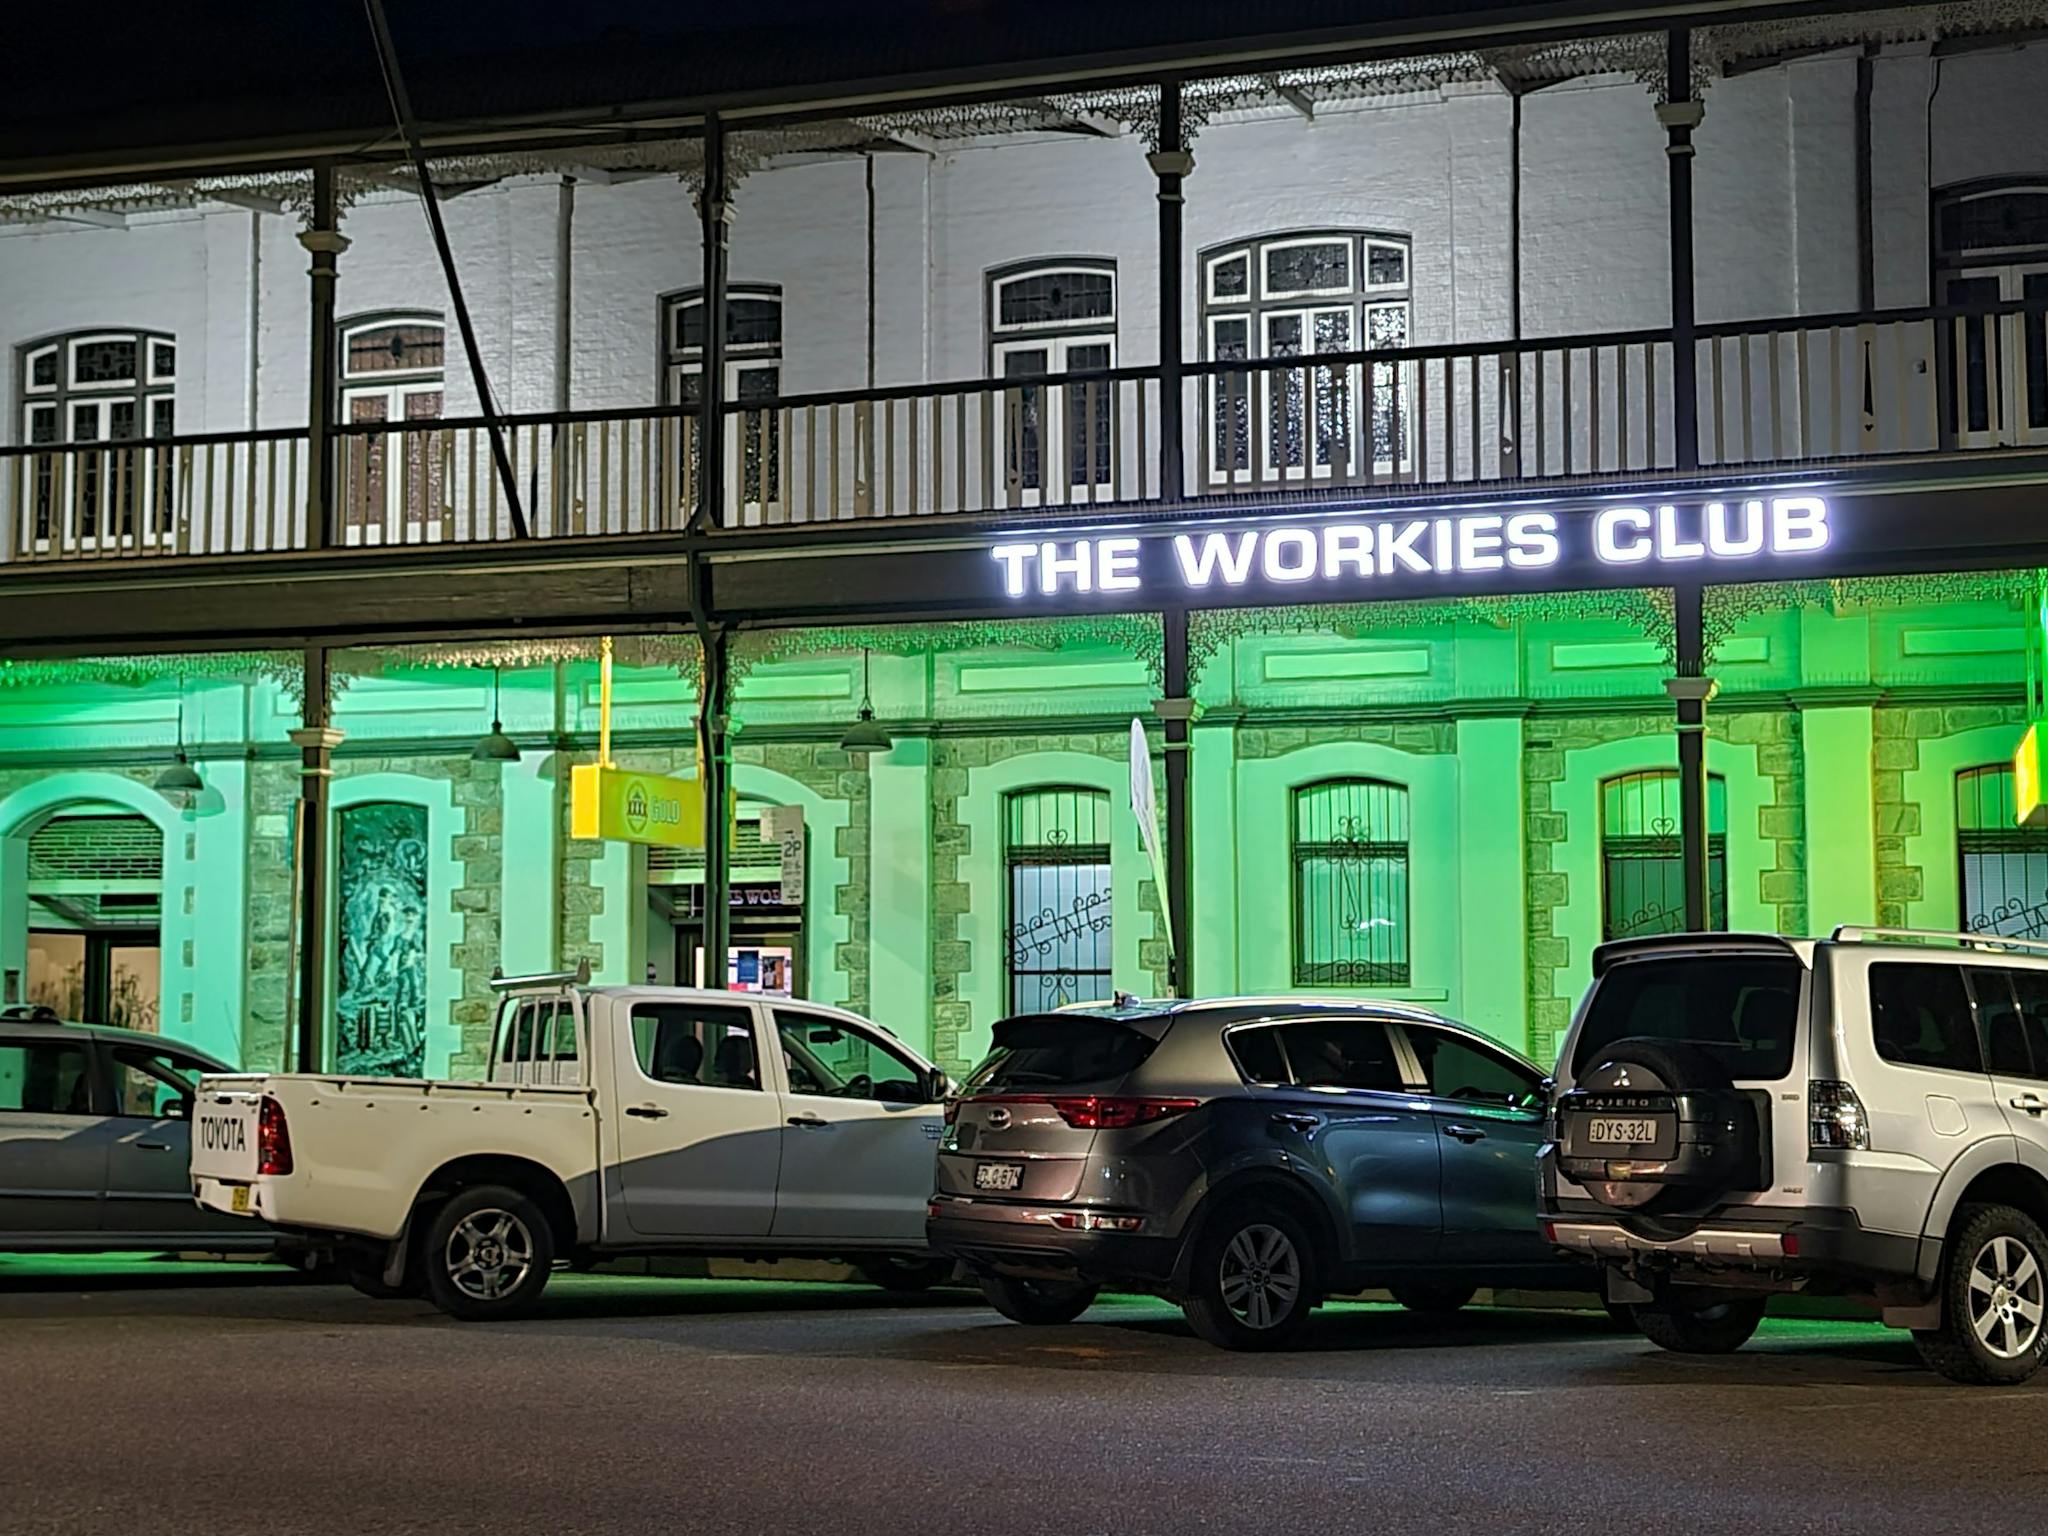 The Workies Club